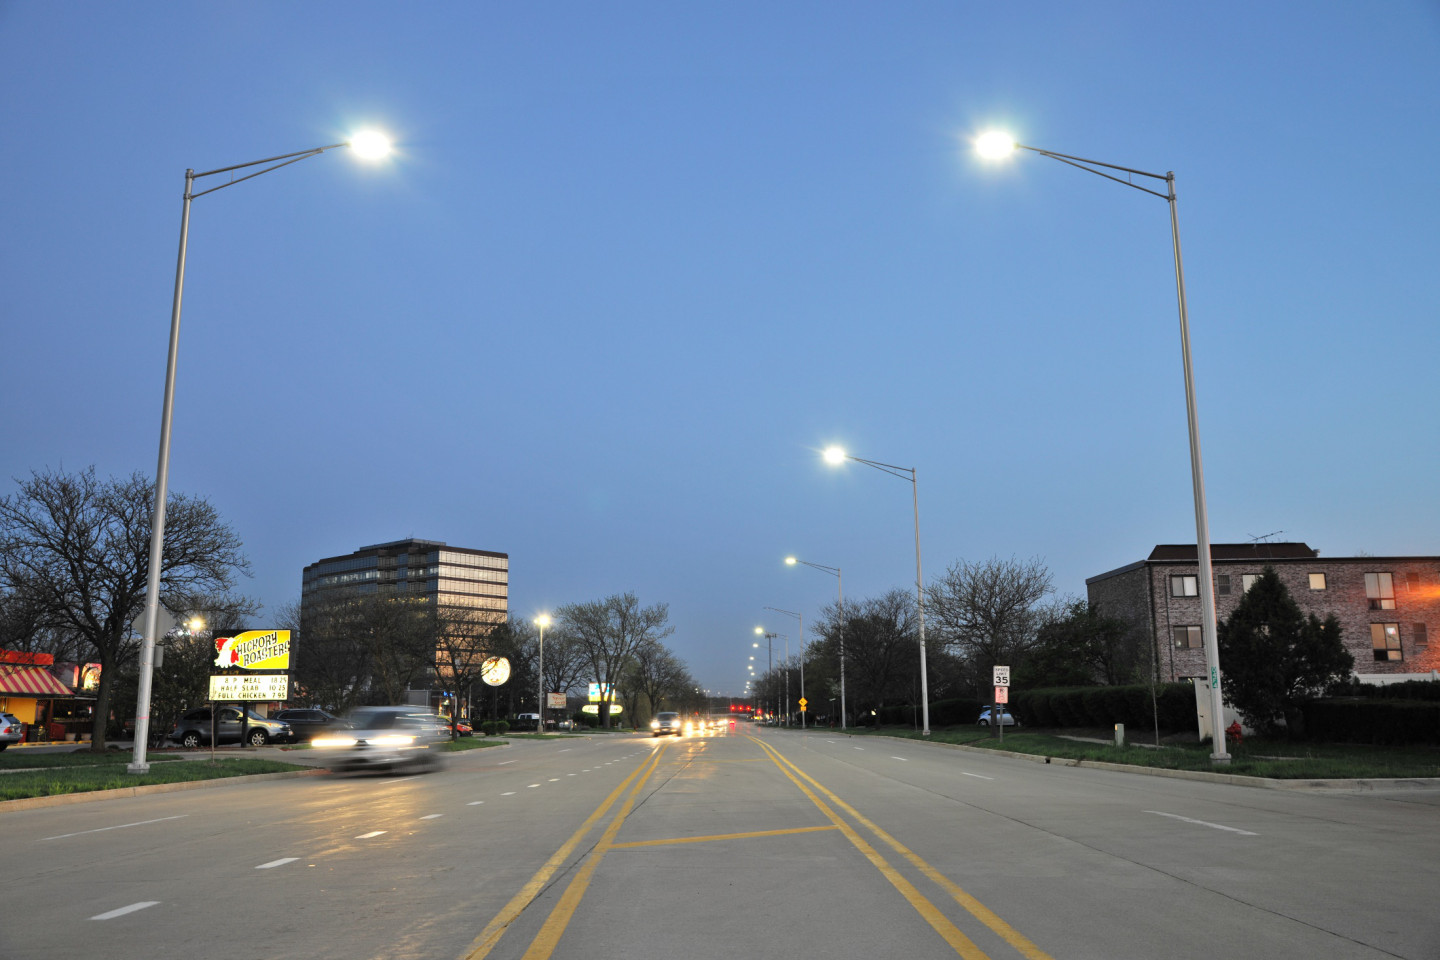 Roadway lighting in Chicago, USA